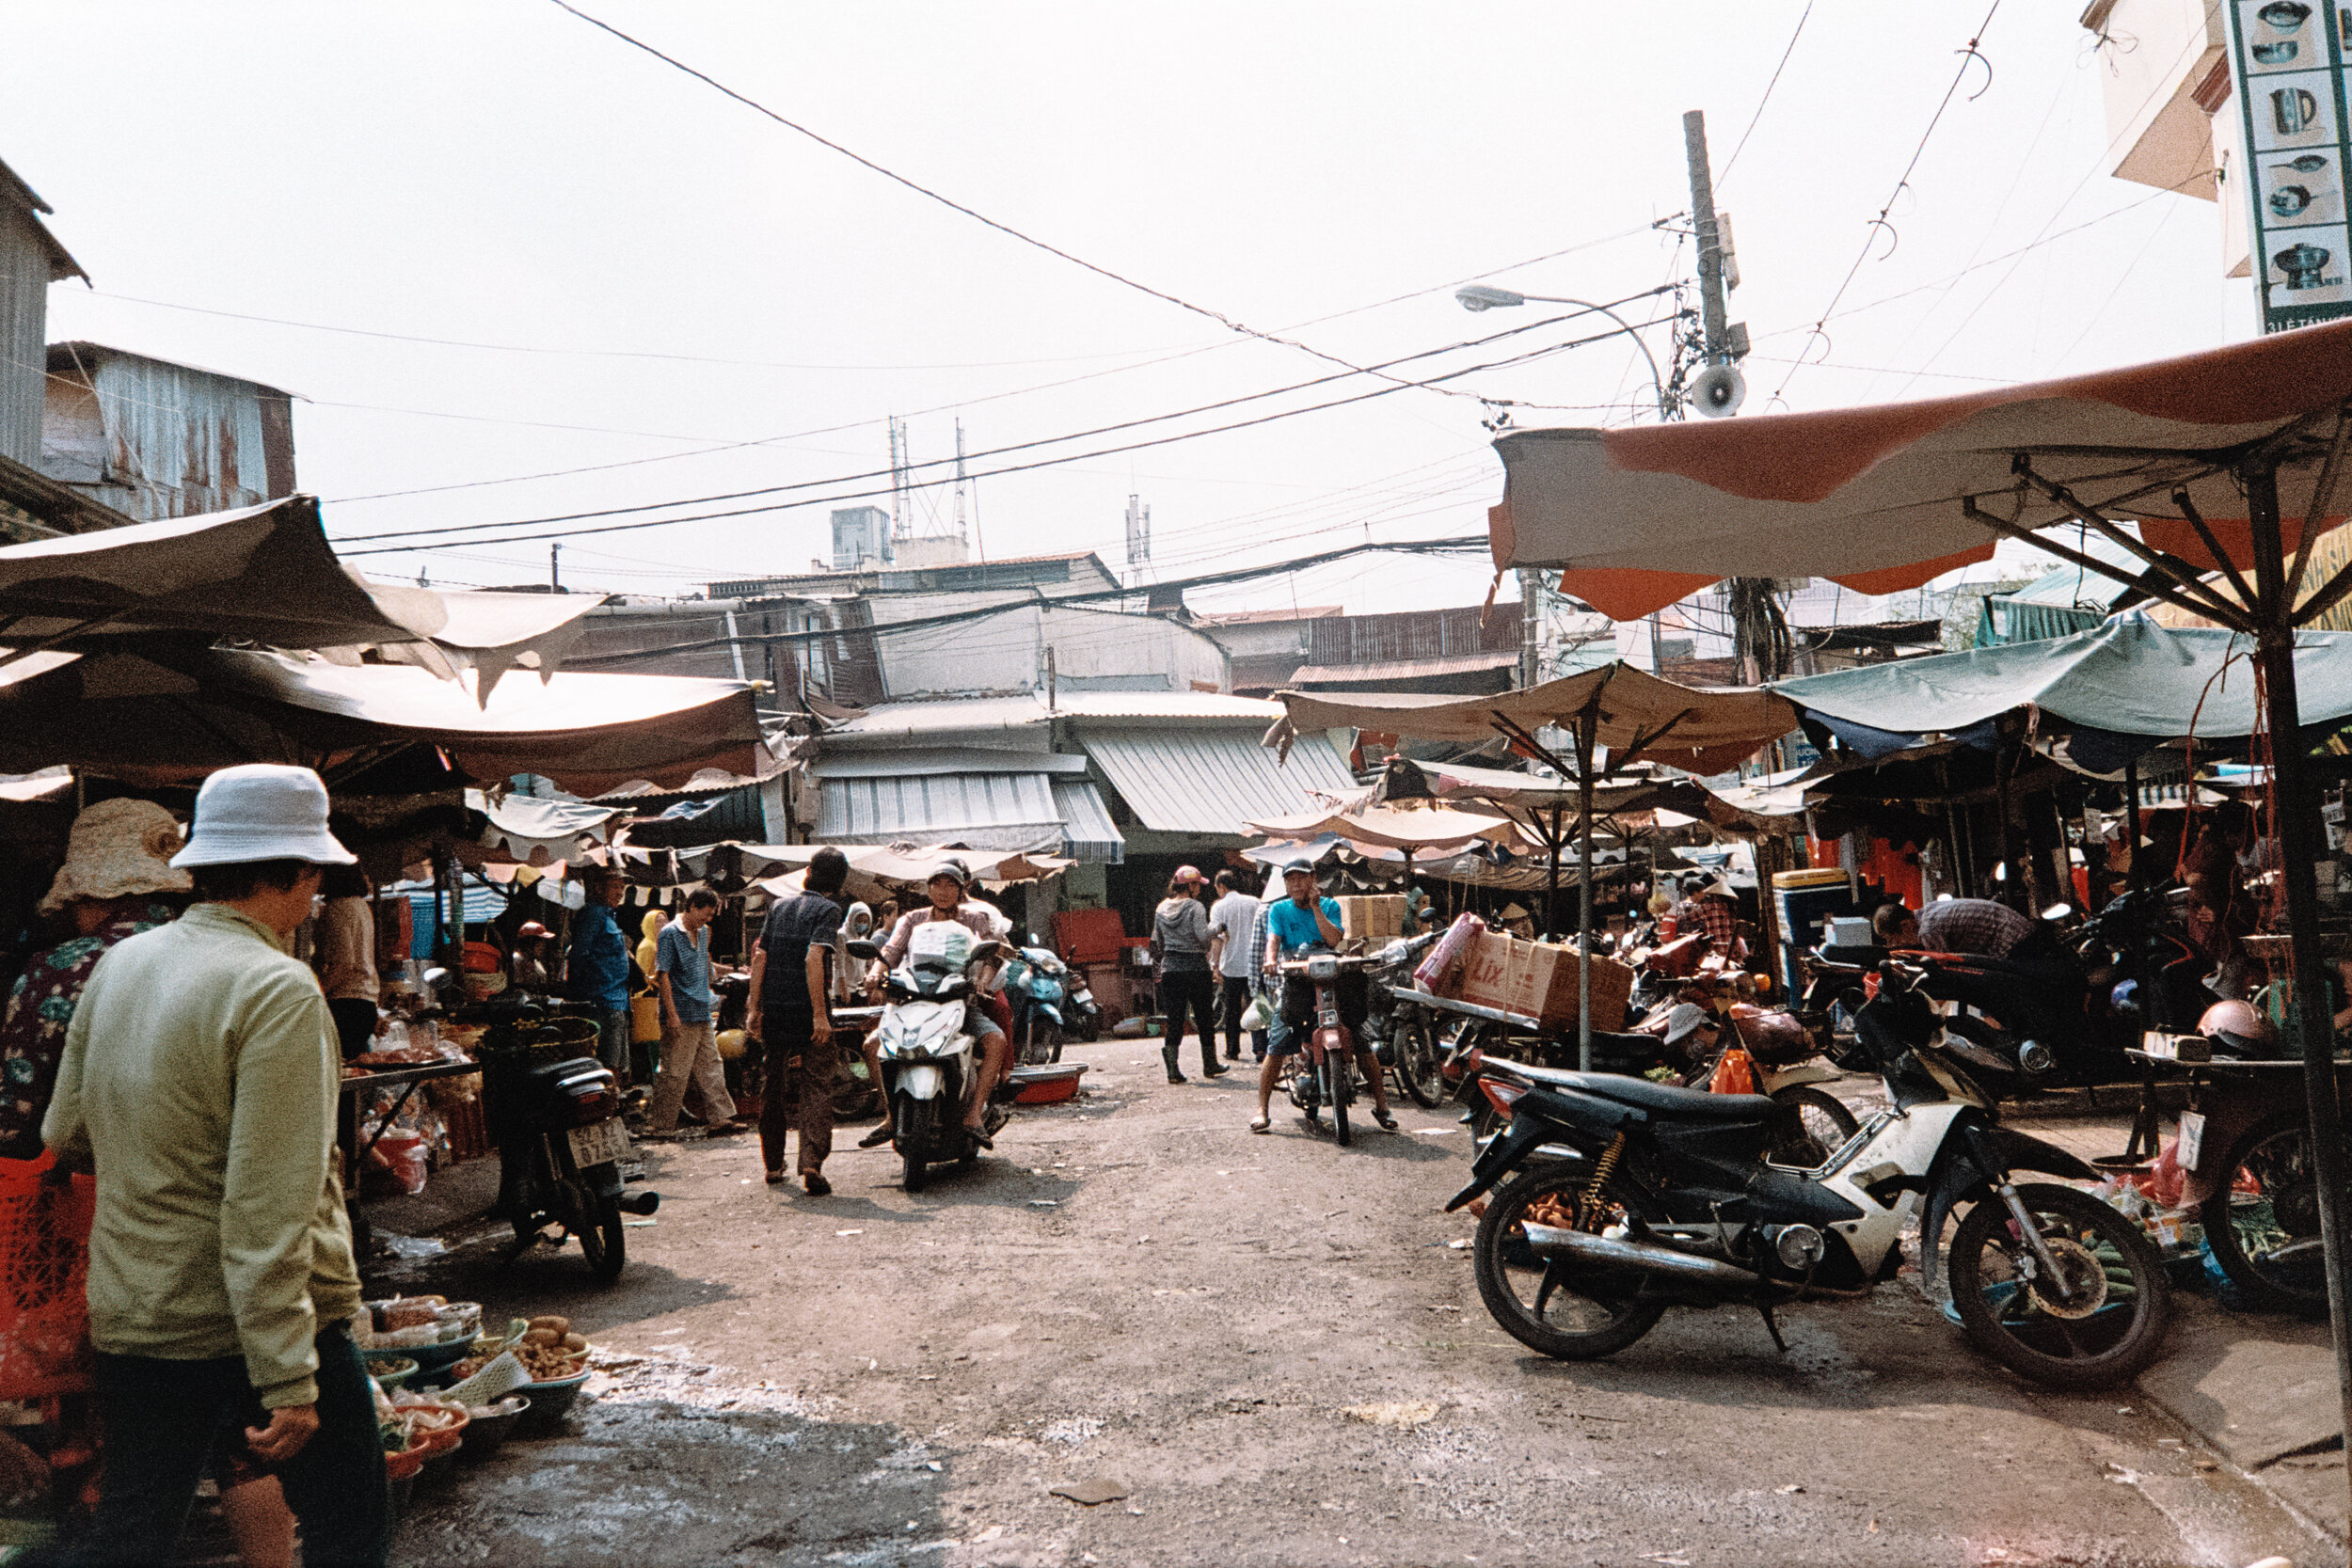 wet-market-ho-chi-minh-saigon-city-vietnam-asia.jpg